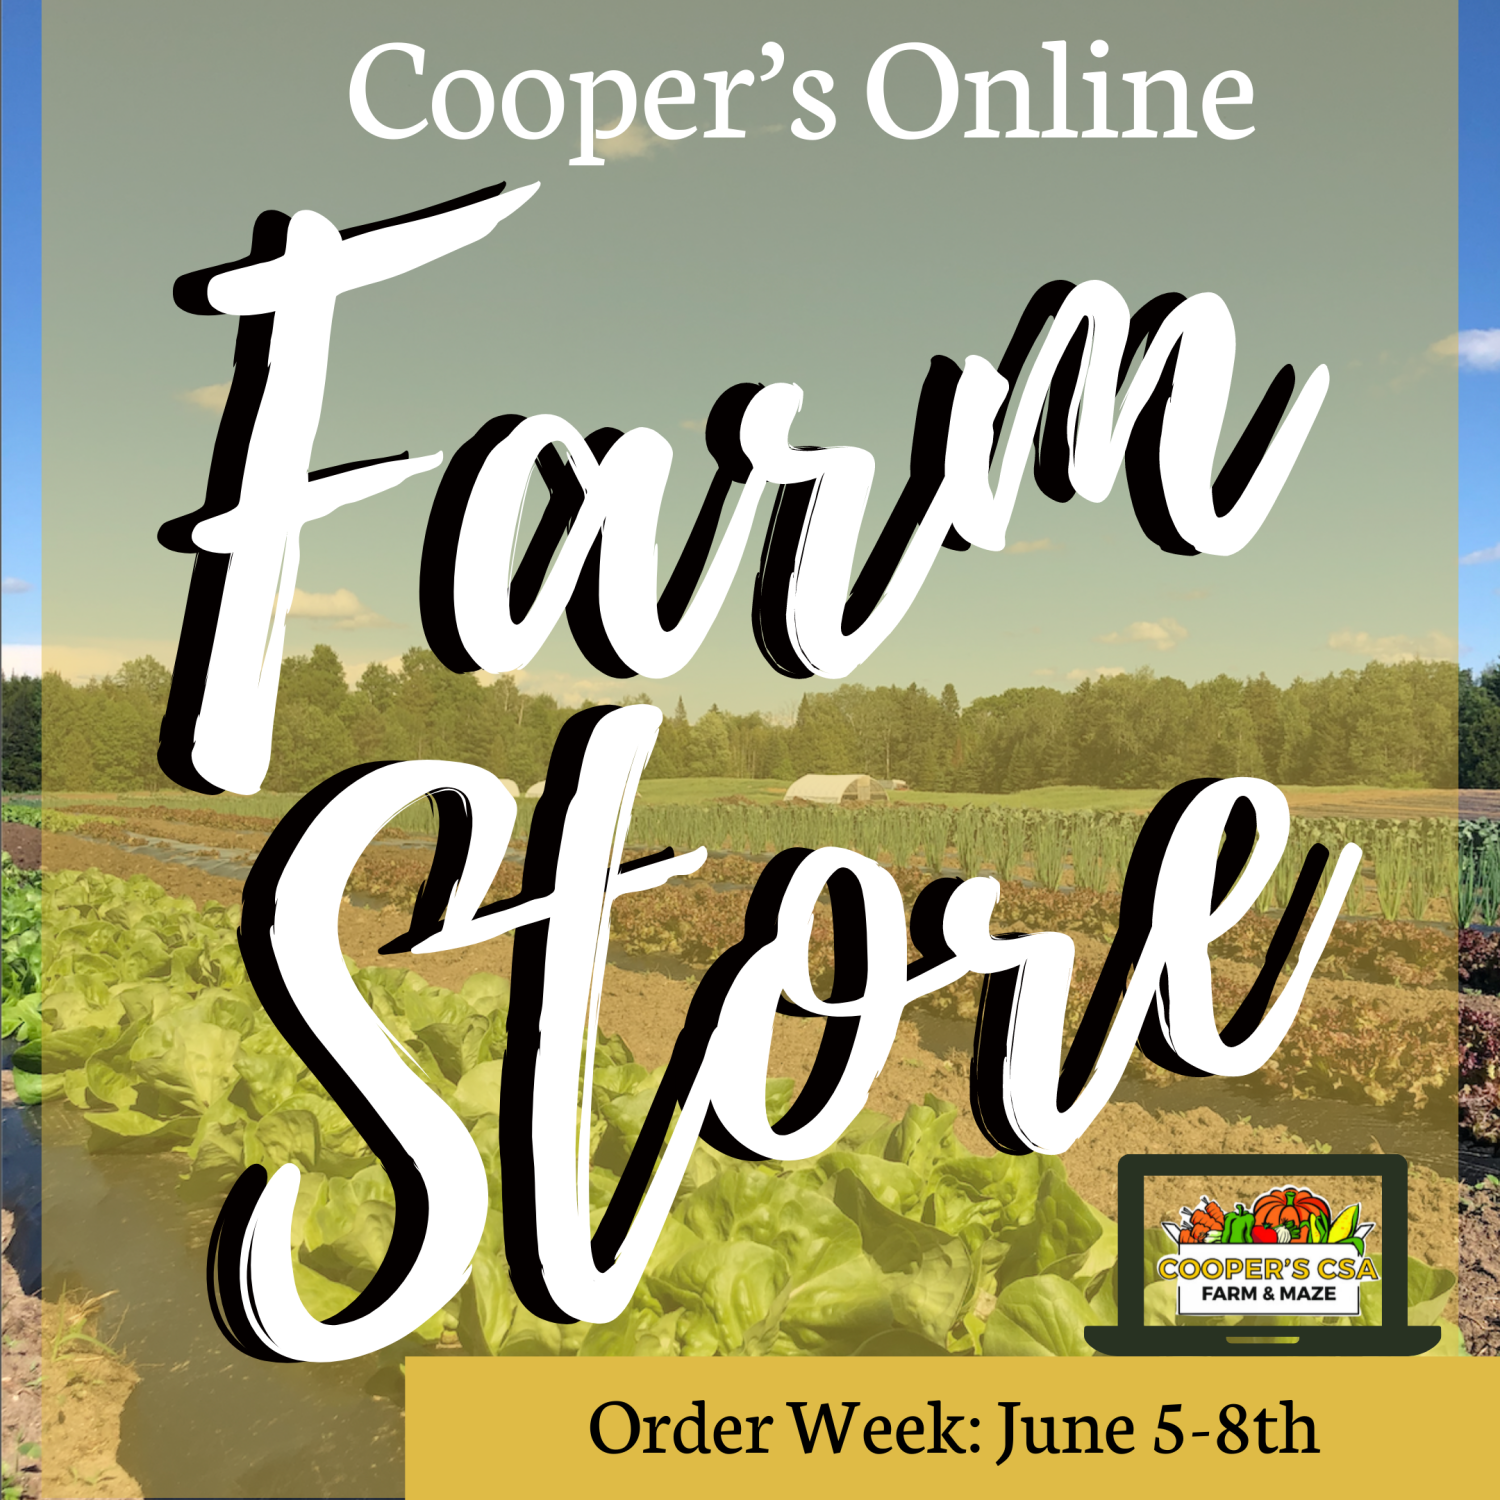 Next Happening: Coopers CSA Online FarmStore- Order week June 5th-8th